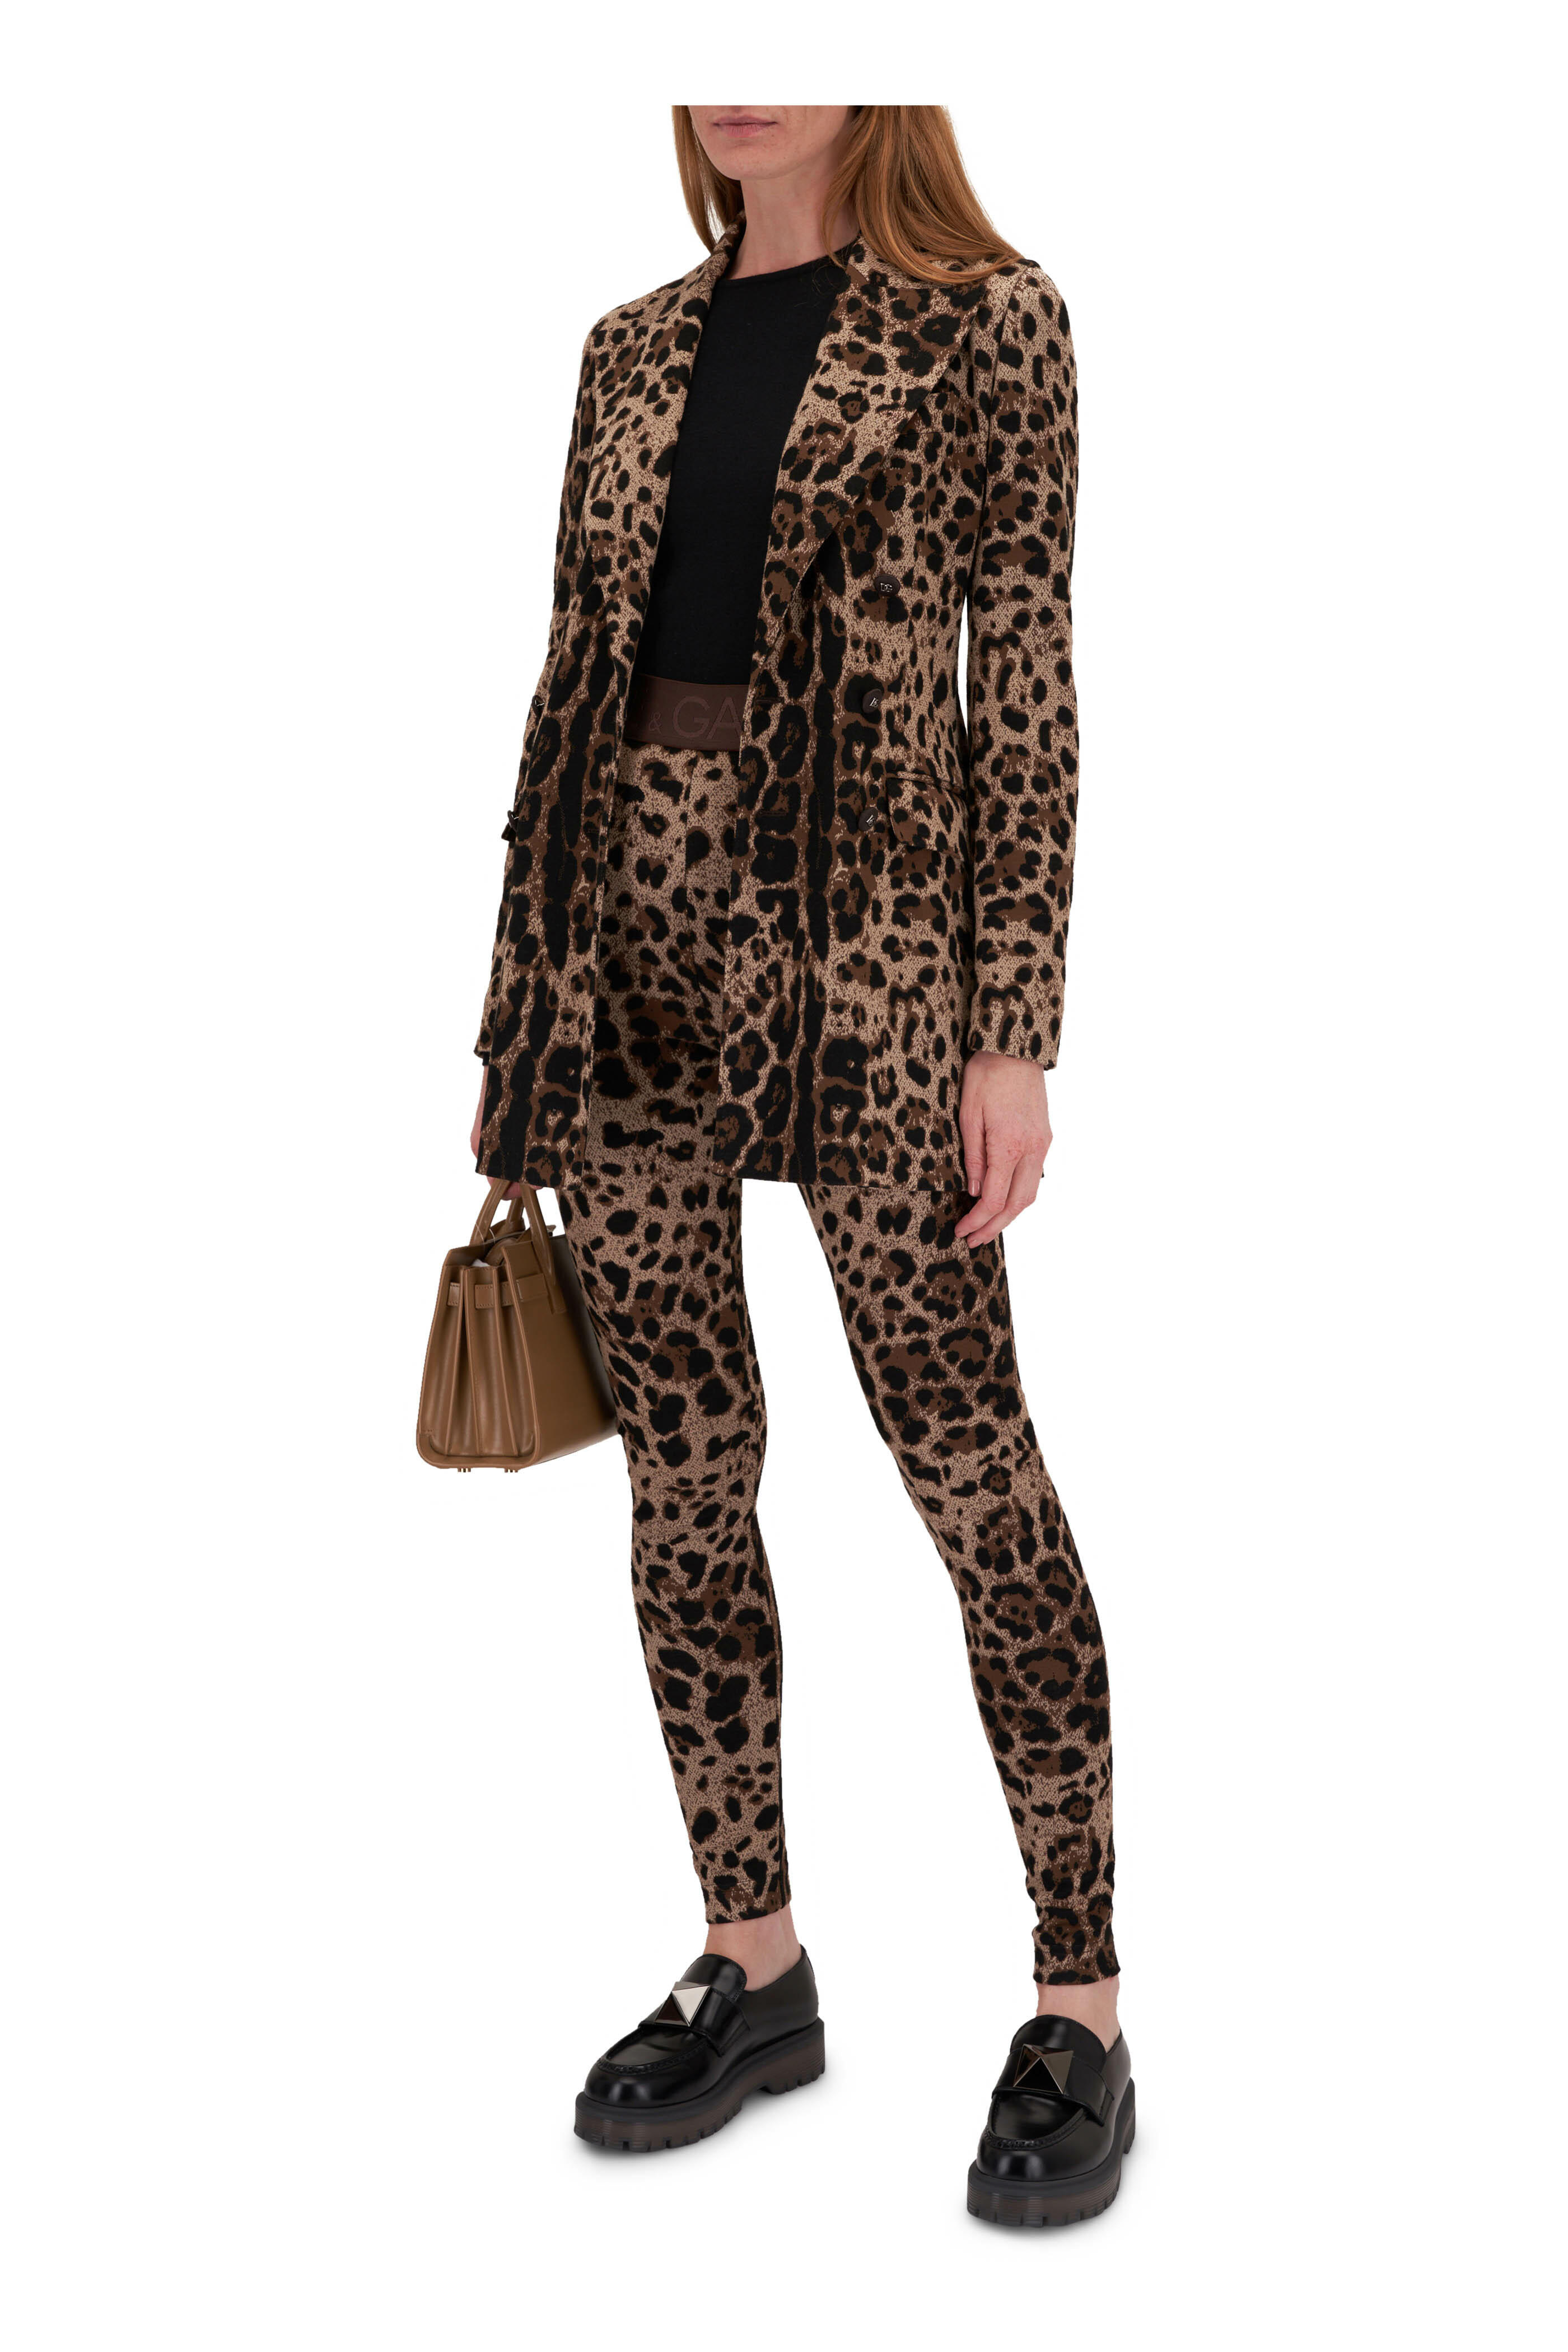 Dolce & Gabbana - Girls Beige Leopard Print DG Trainers